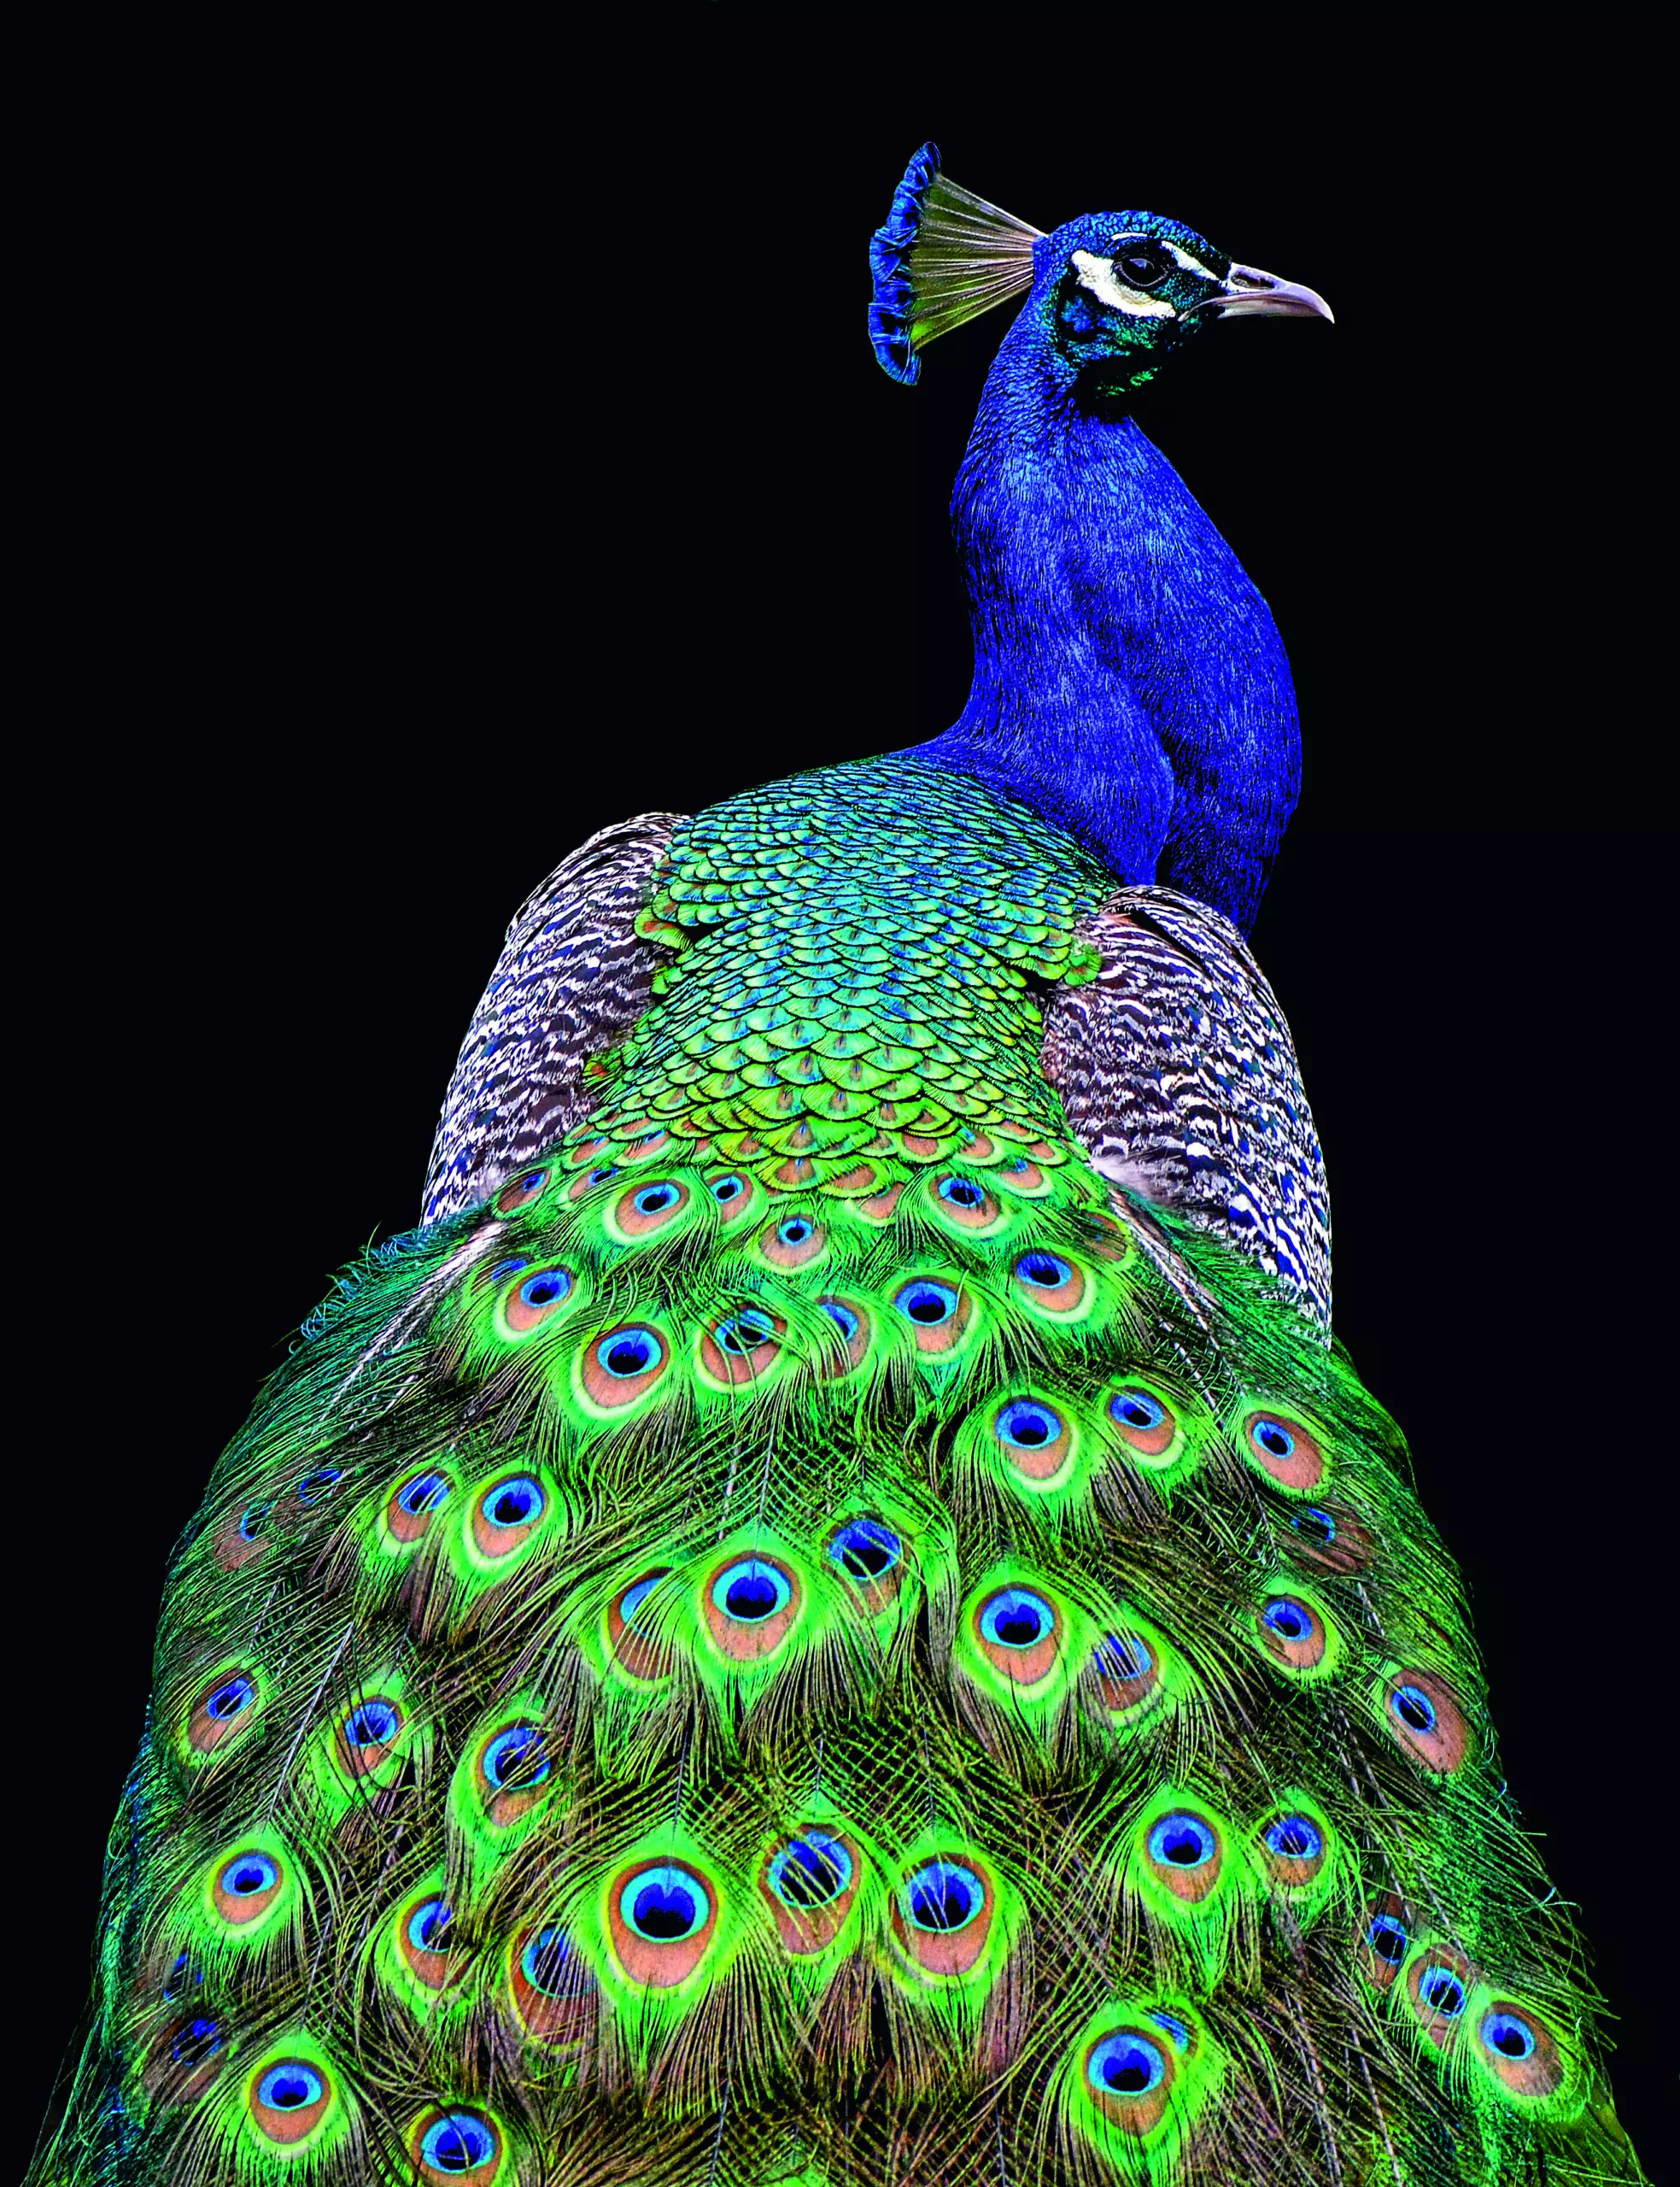 Wandbild (5624) Peacock by Danny Mendosa, 1x.com präsentiert: Kreatives,Details und Strukturen,Tiere,Natur,Vögel,Wildtiere,Sonstiges Kreatives,Sonstige Naturdetails